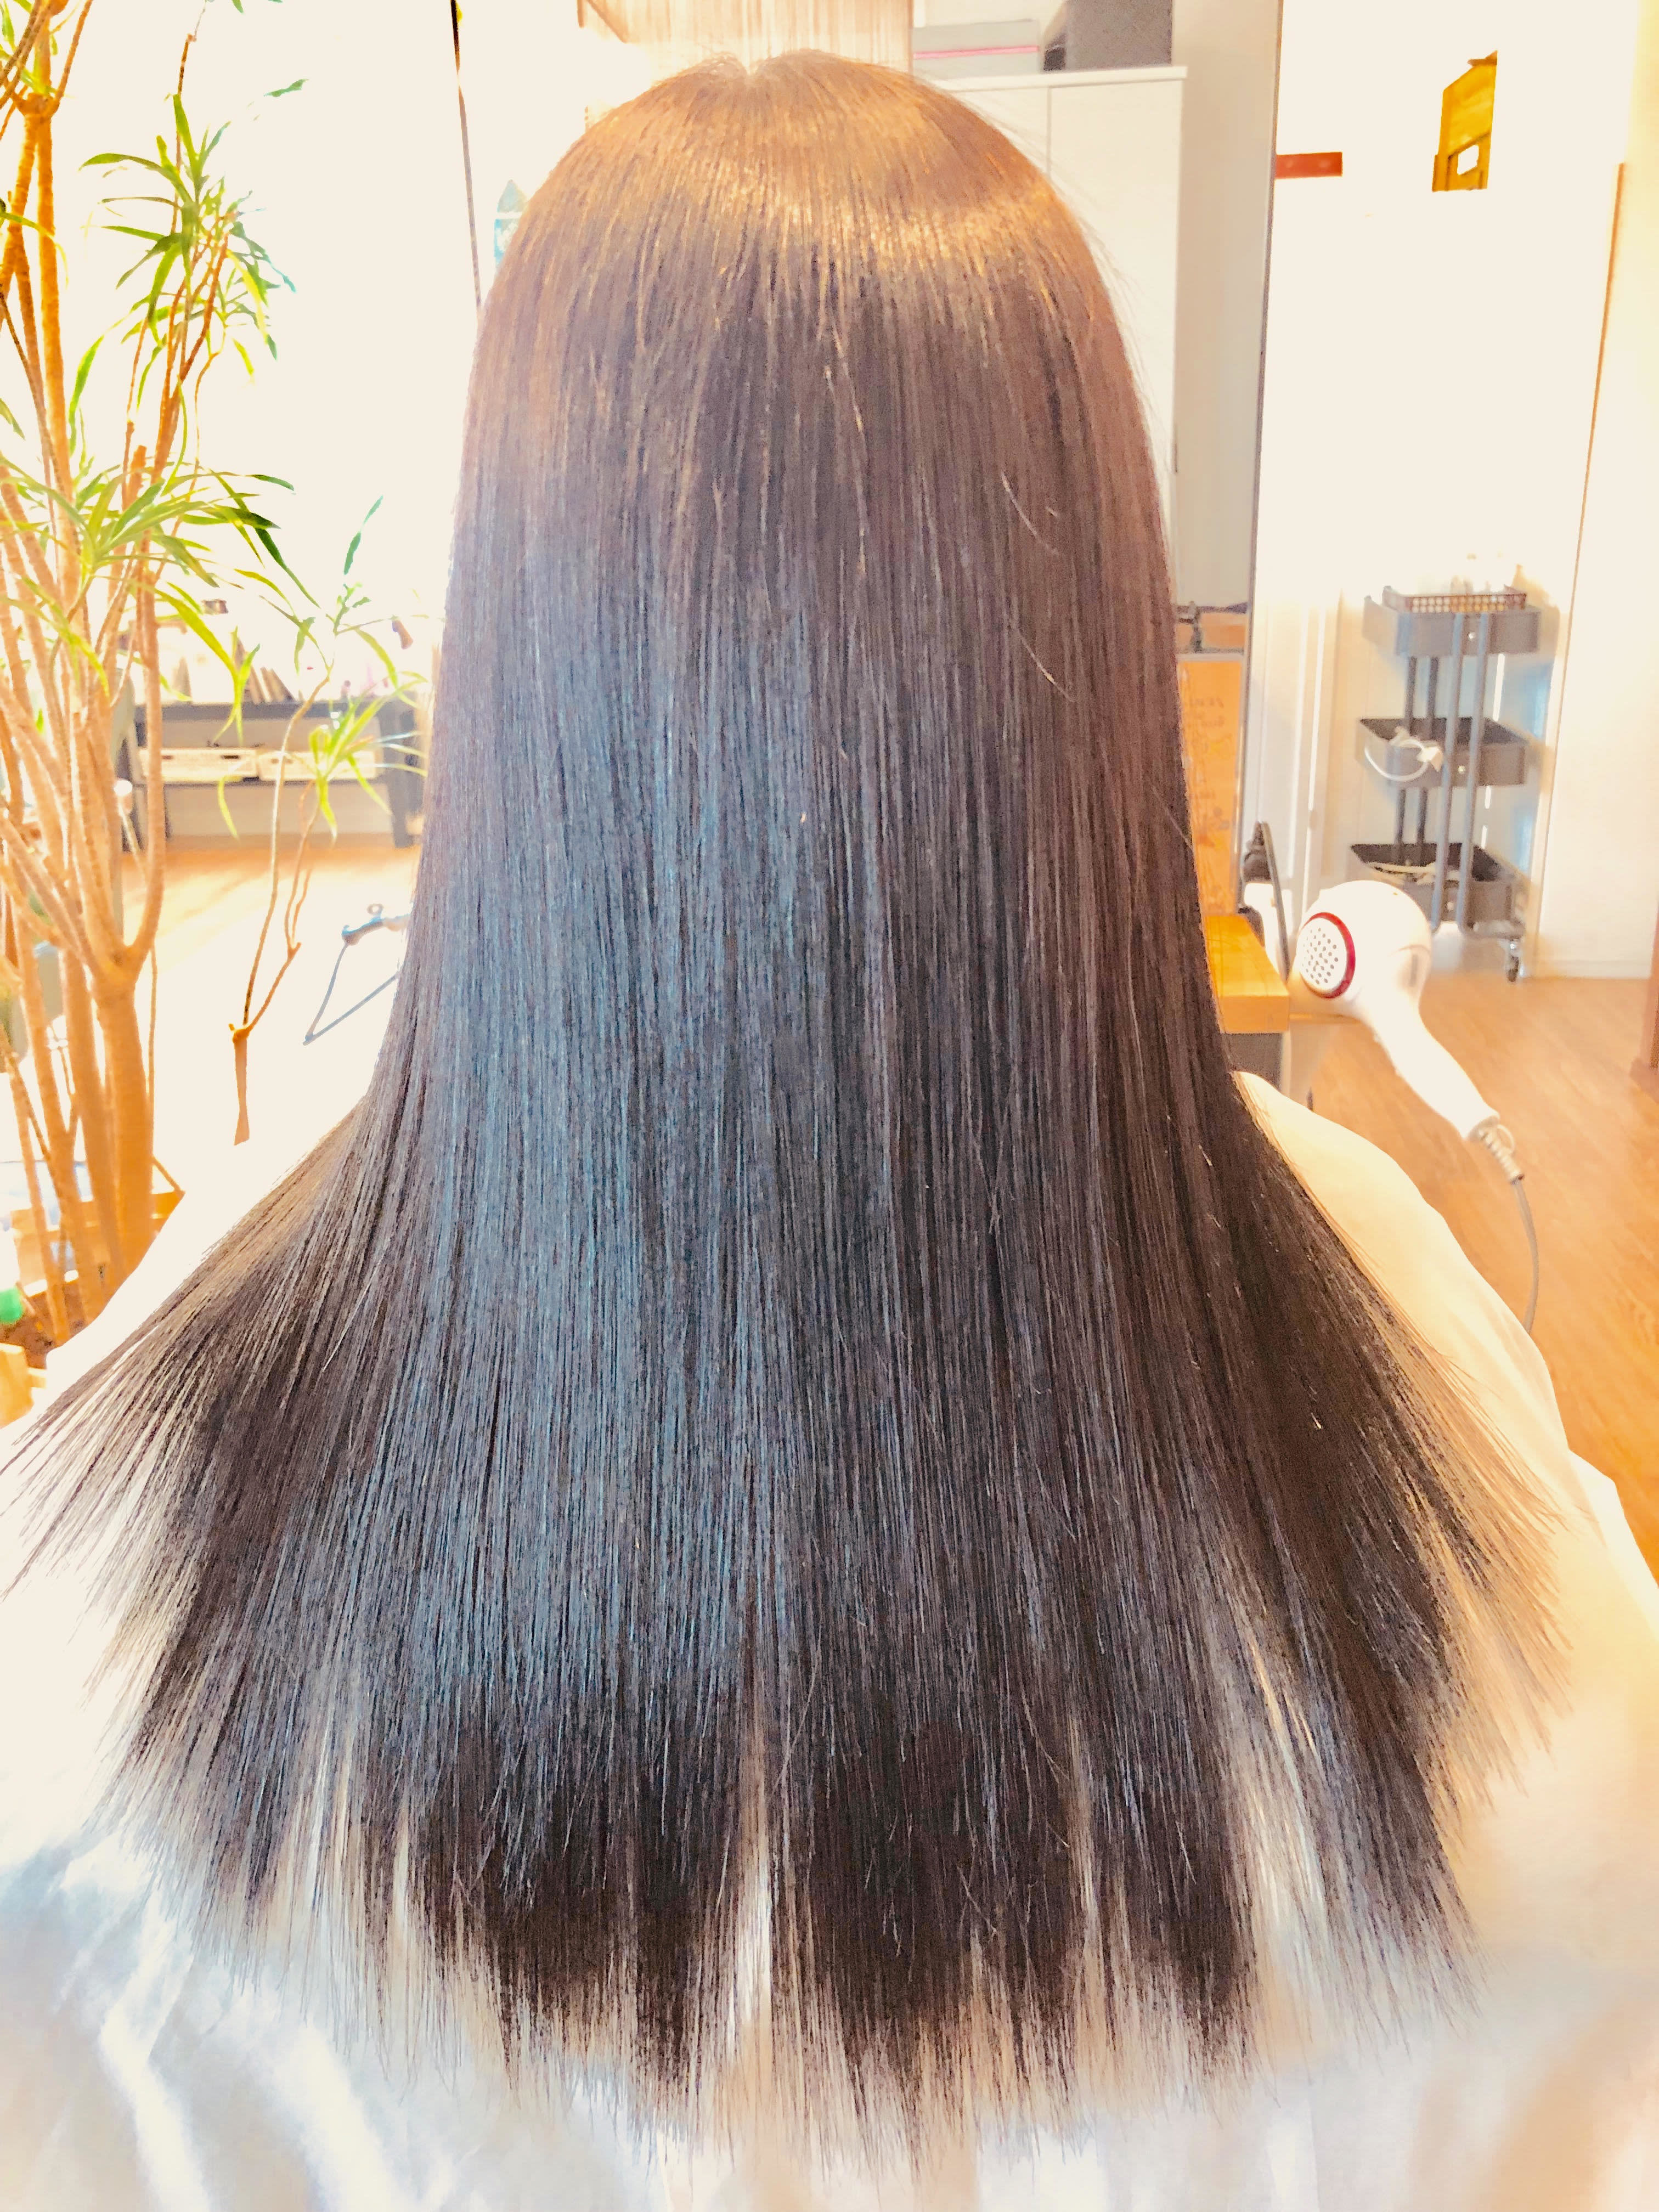 ACRI organic hair salon【アクリ オーガニック ヘアーサロン】のスタイル紹介。輝髪（キラガミ）ストリートメント